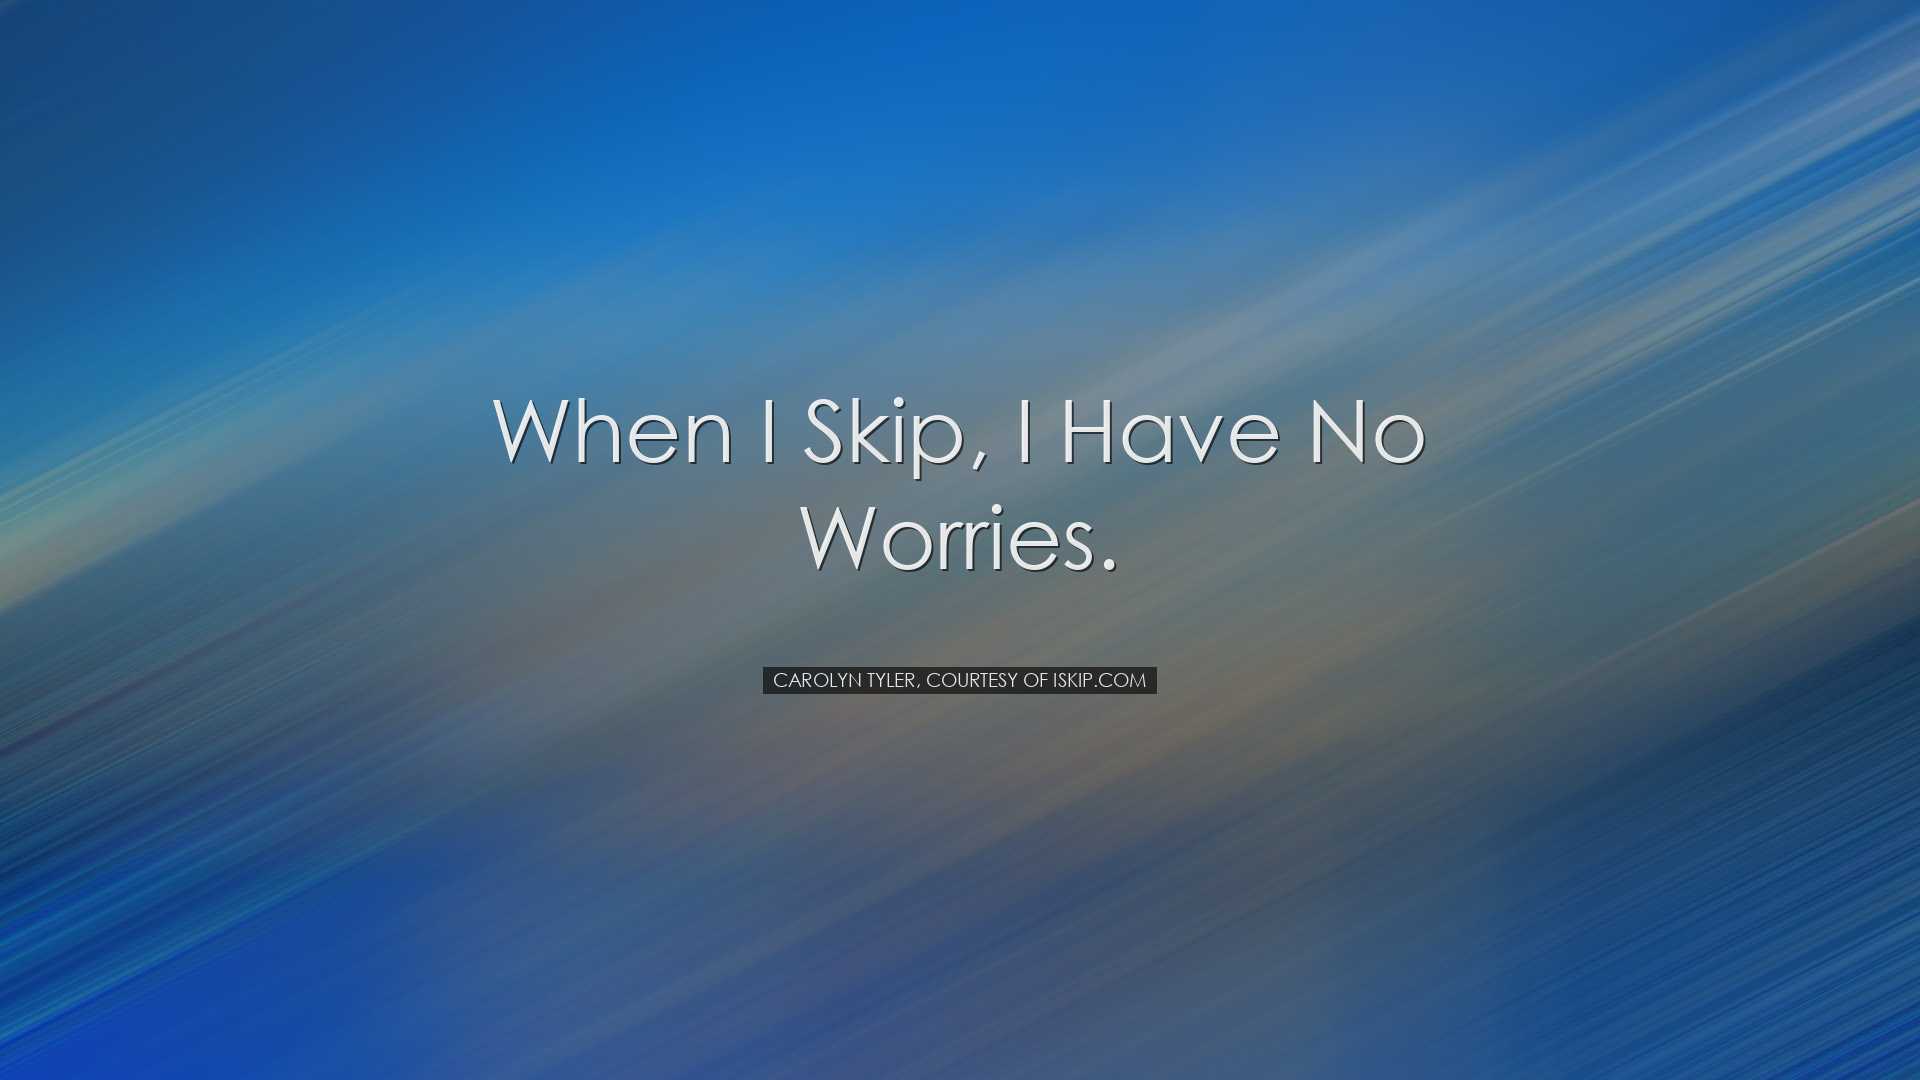 When I skip, I have no worries. - Carolyn Tyler, courtesy of iSkip